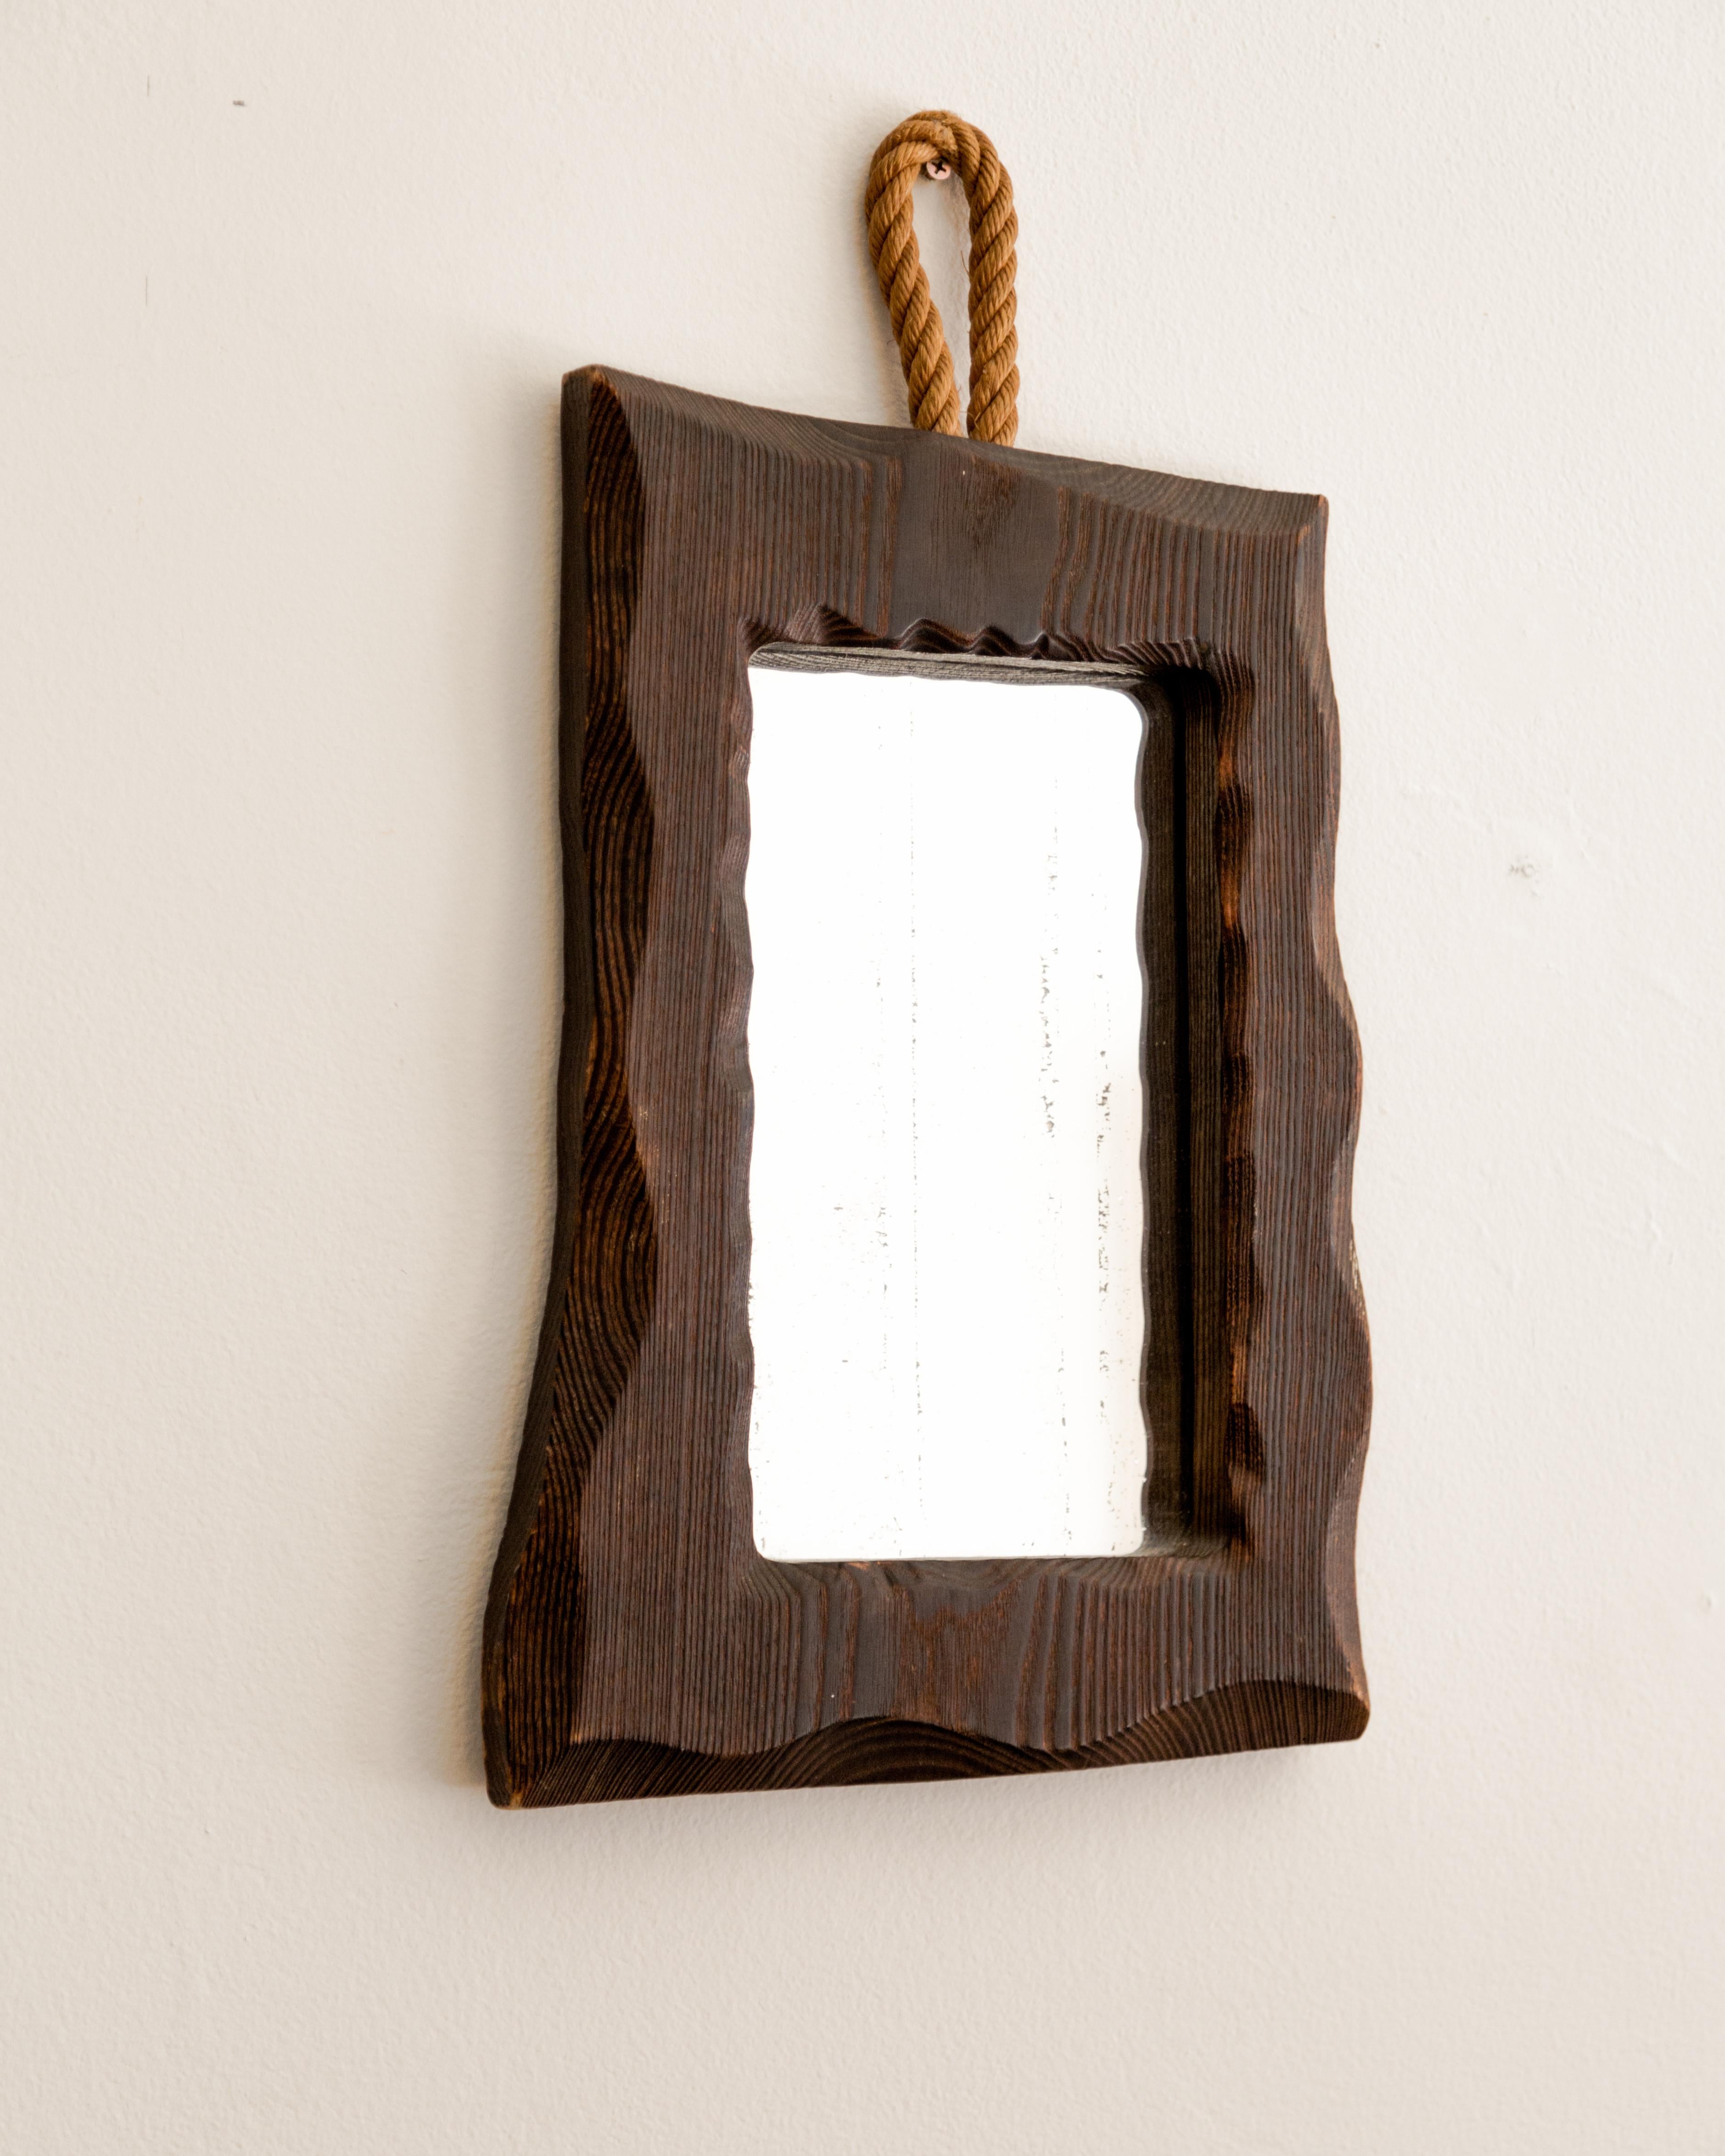 Baltic pine framed brutalist mirror with hemp rope hanging loop, France circa 1960.